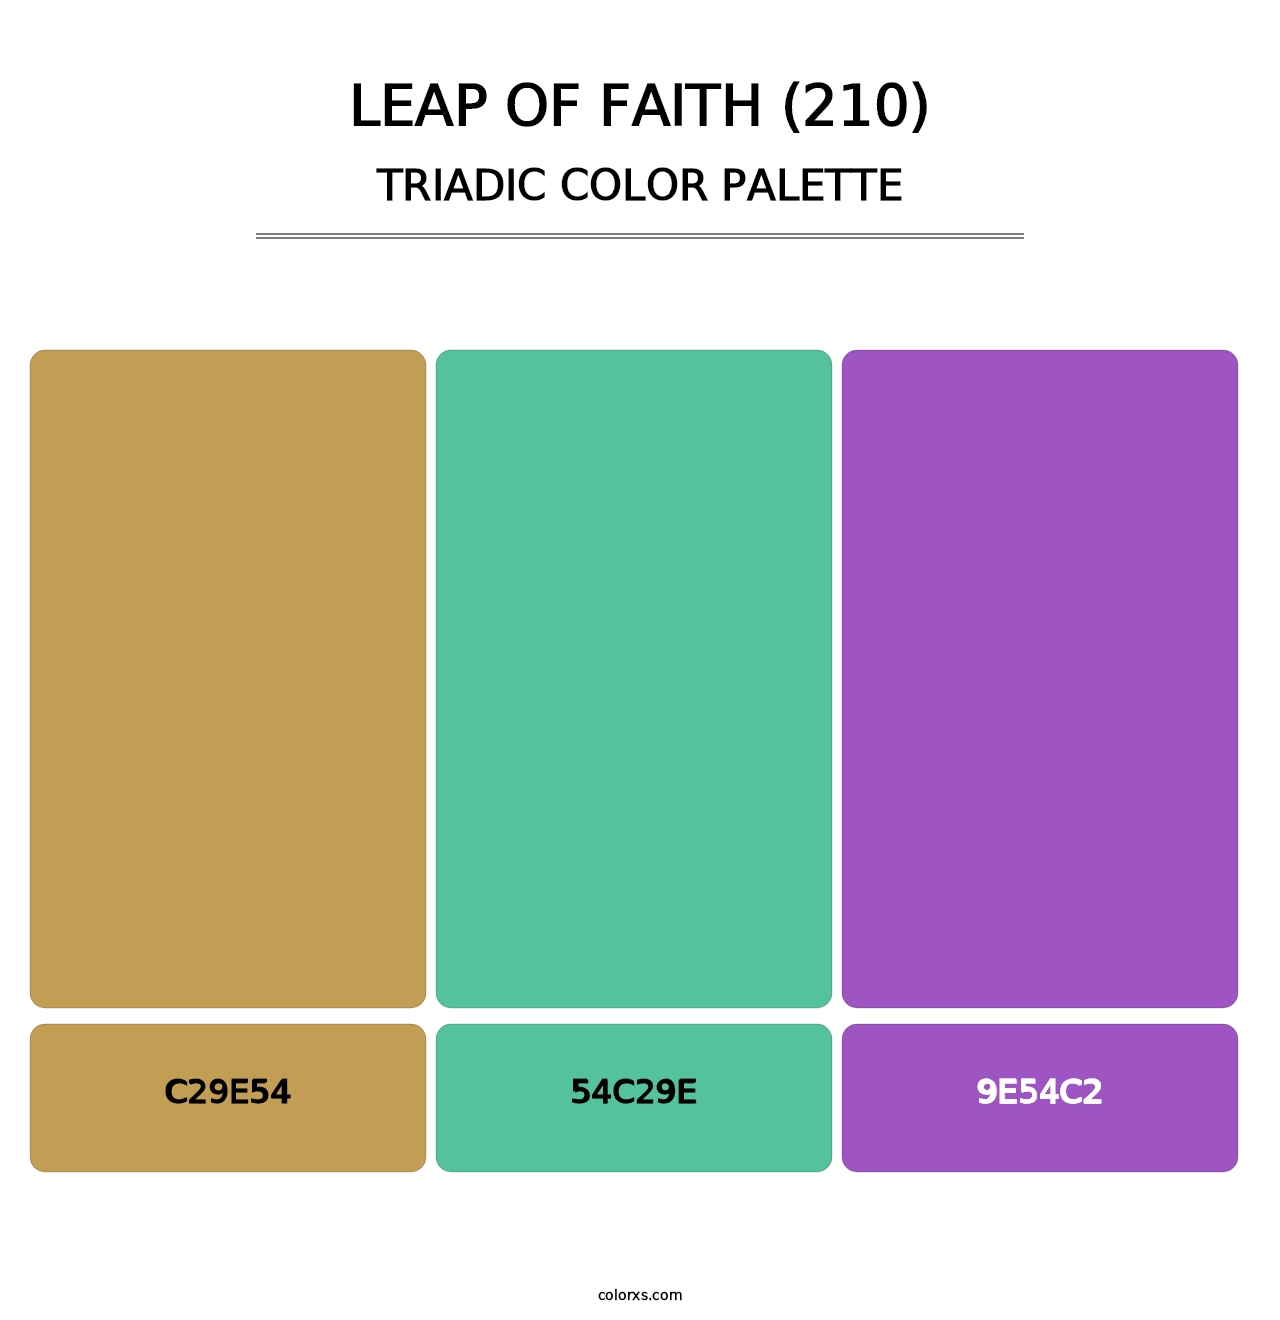 Leap of Faith (210) - Triadic Color Palette